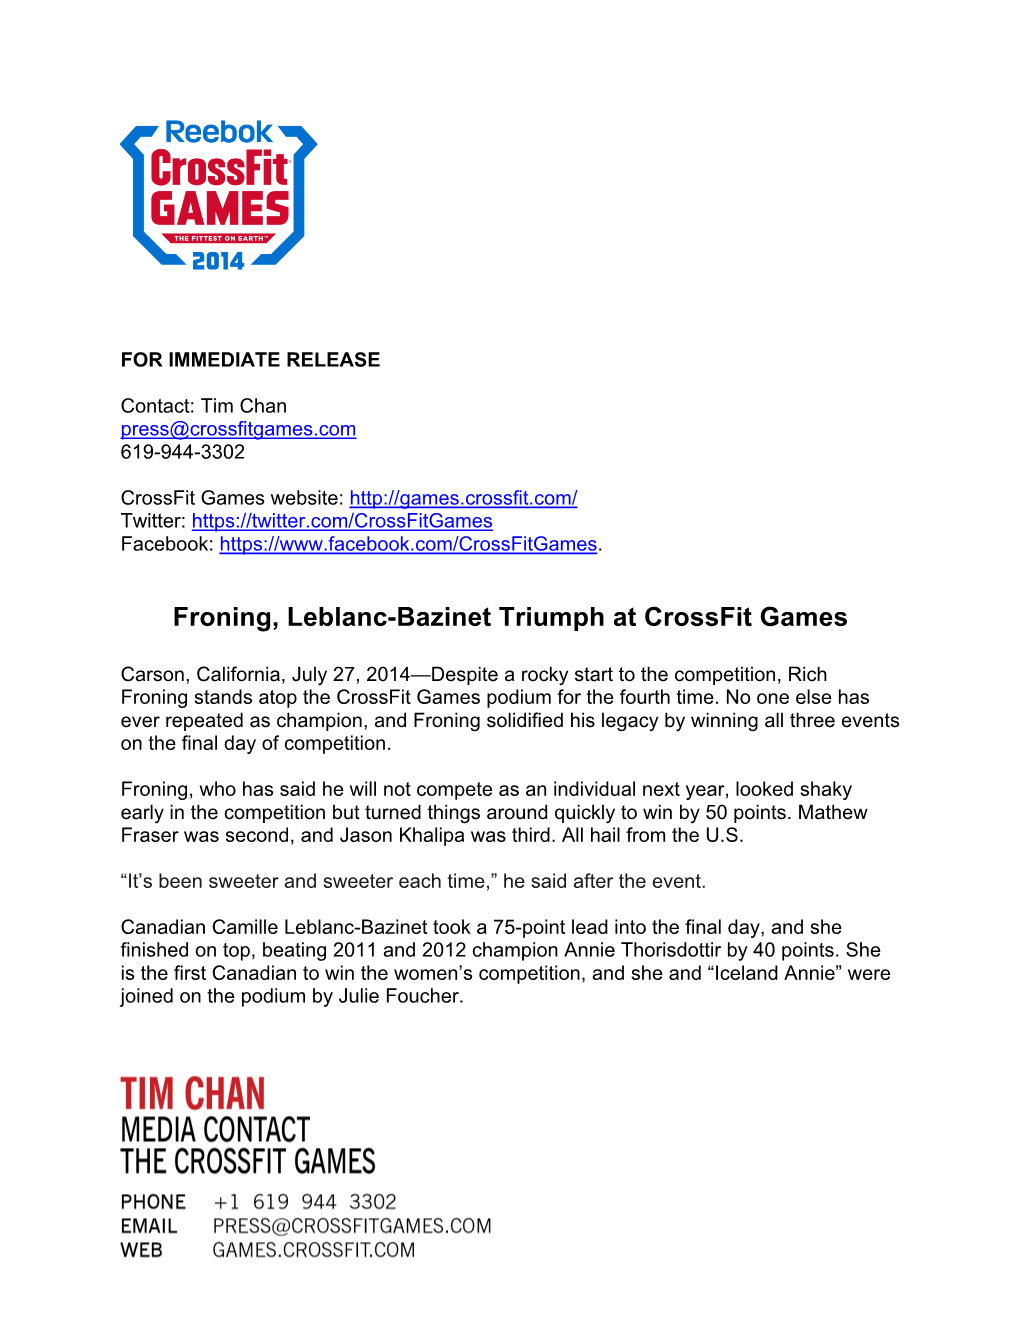 Froning, Leblanc-Bazinet Triumph at Crossfit Games